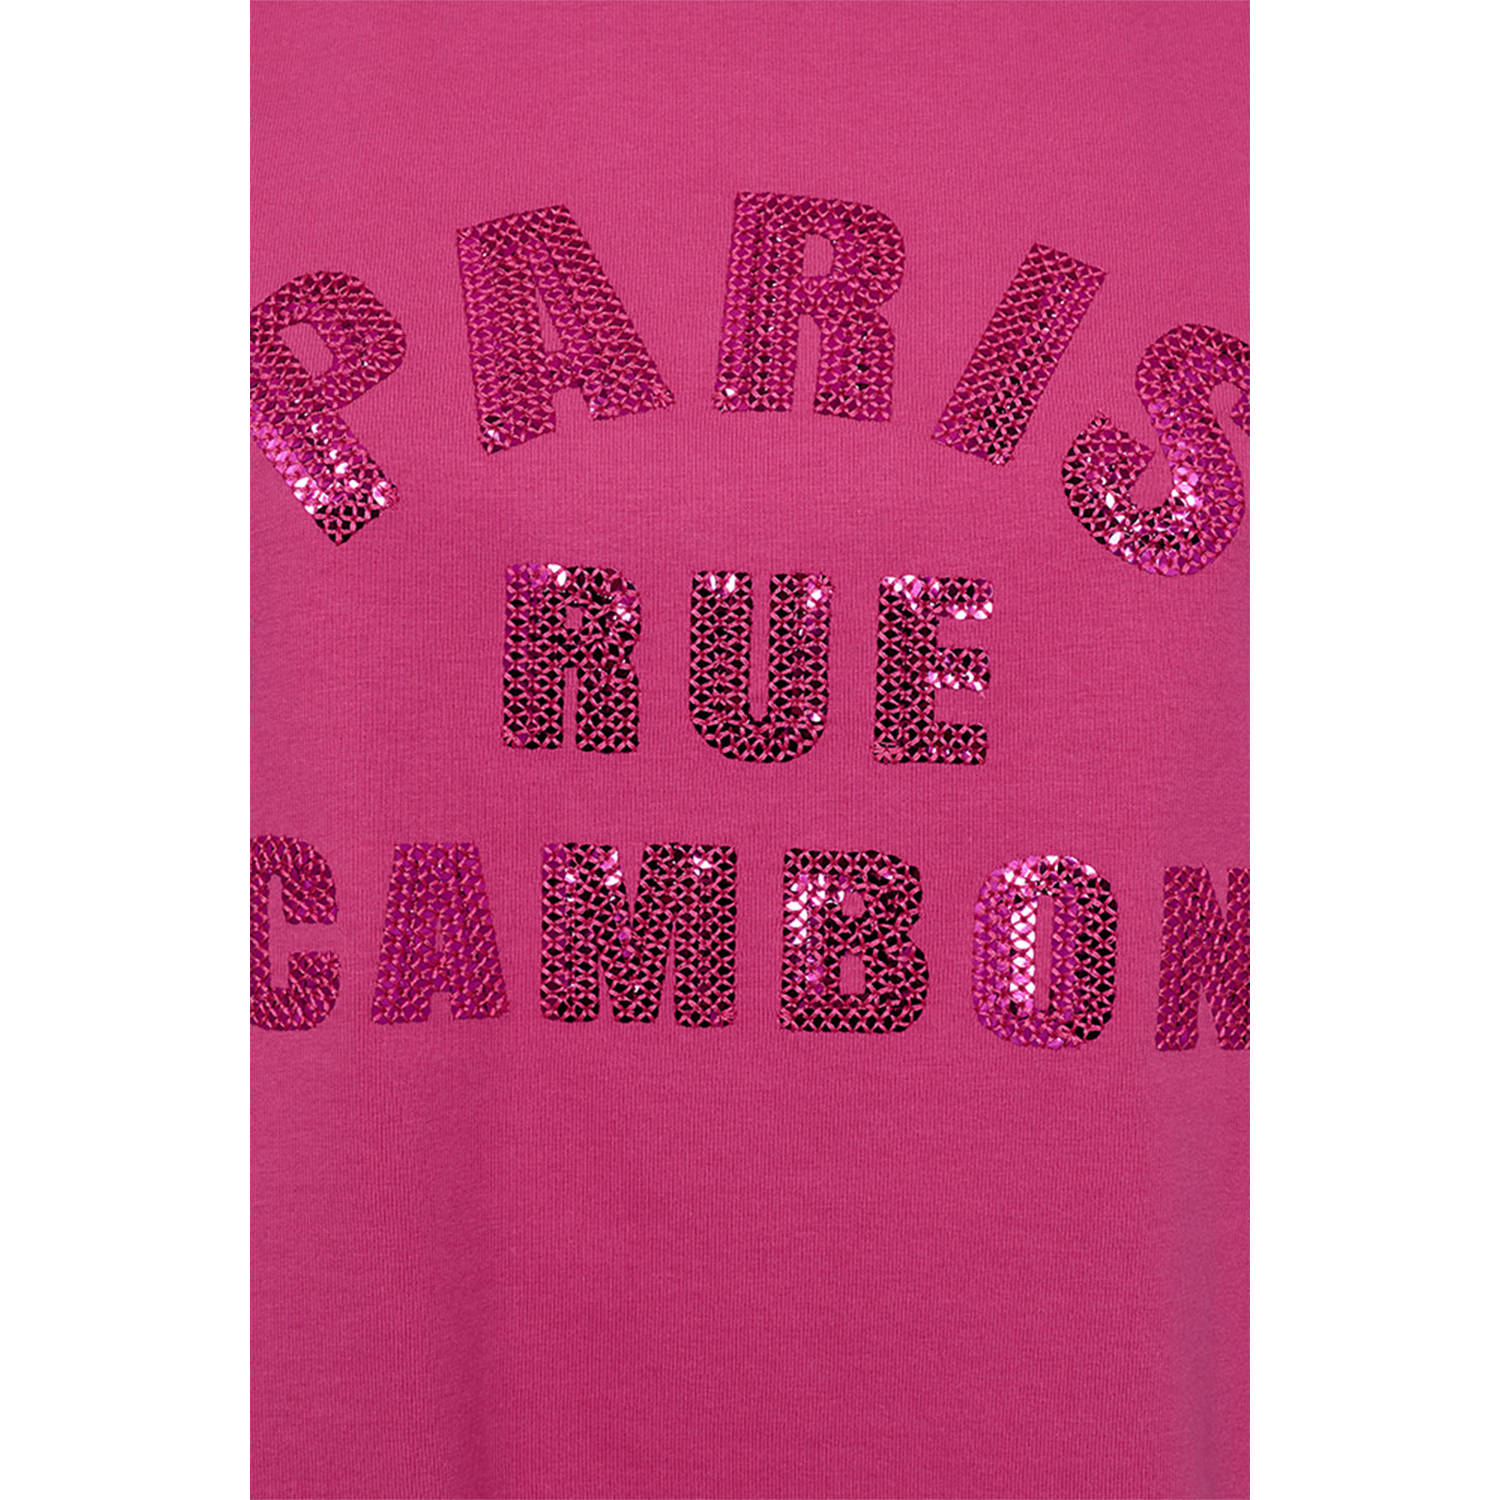 FREEQUENT T-shirt met tekst en pailletten roze